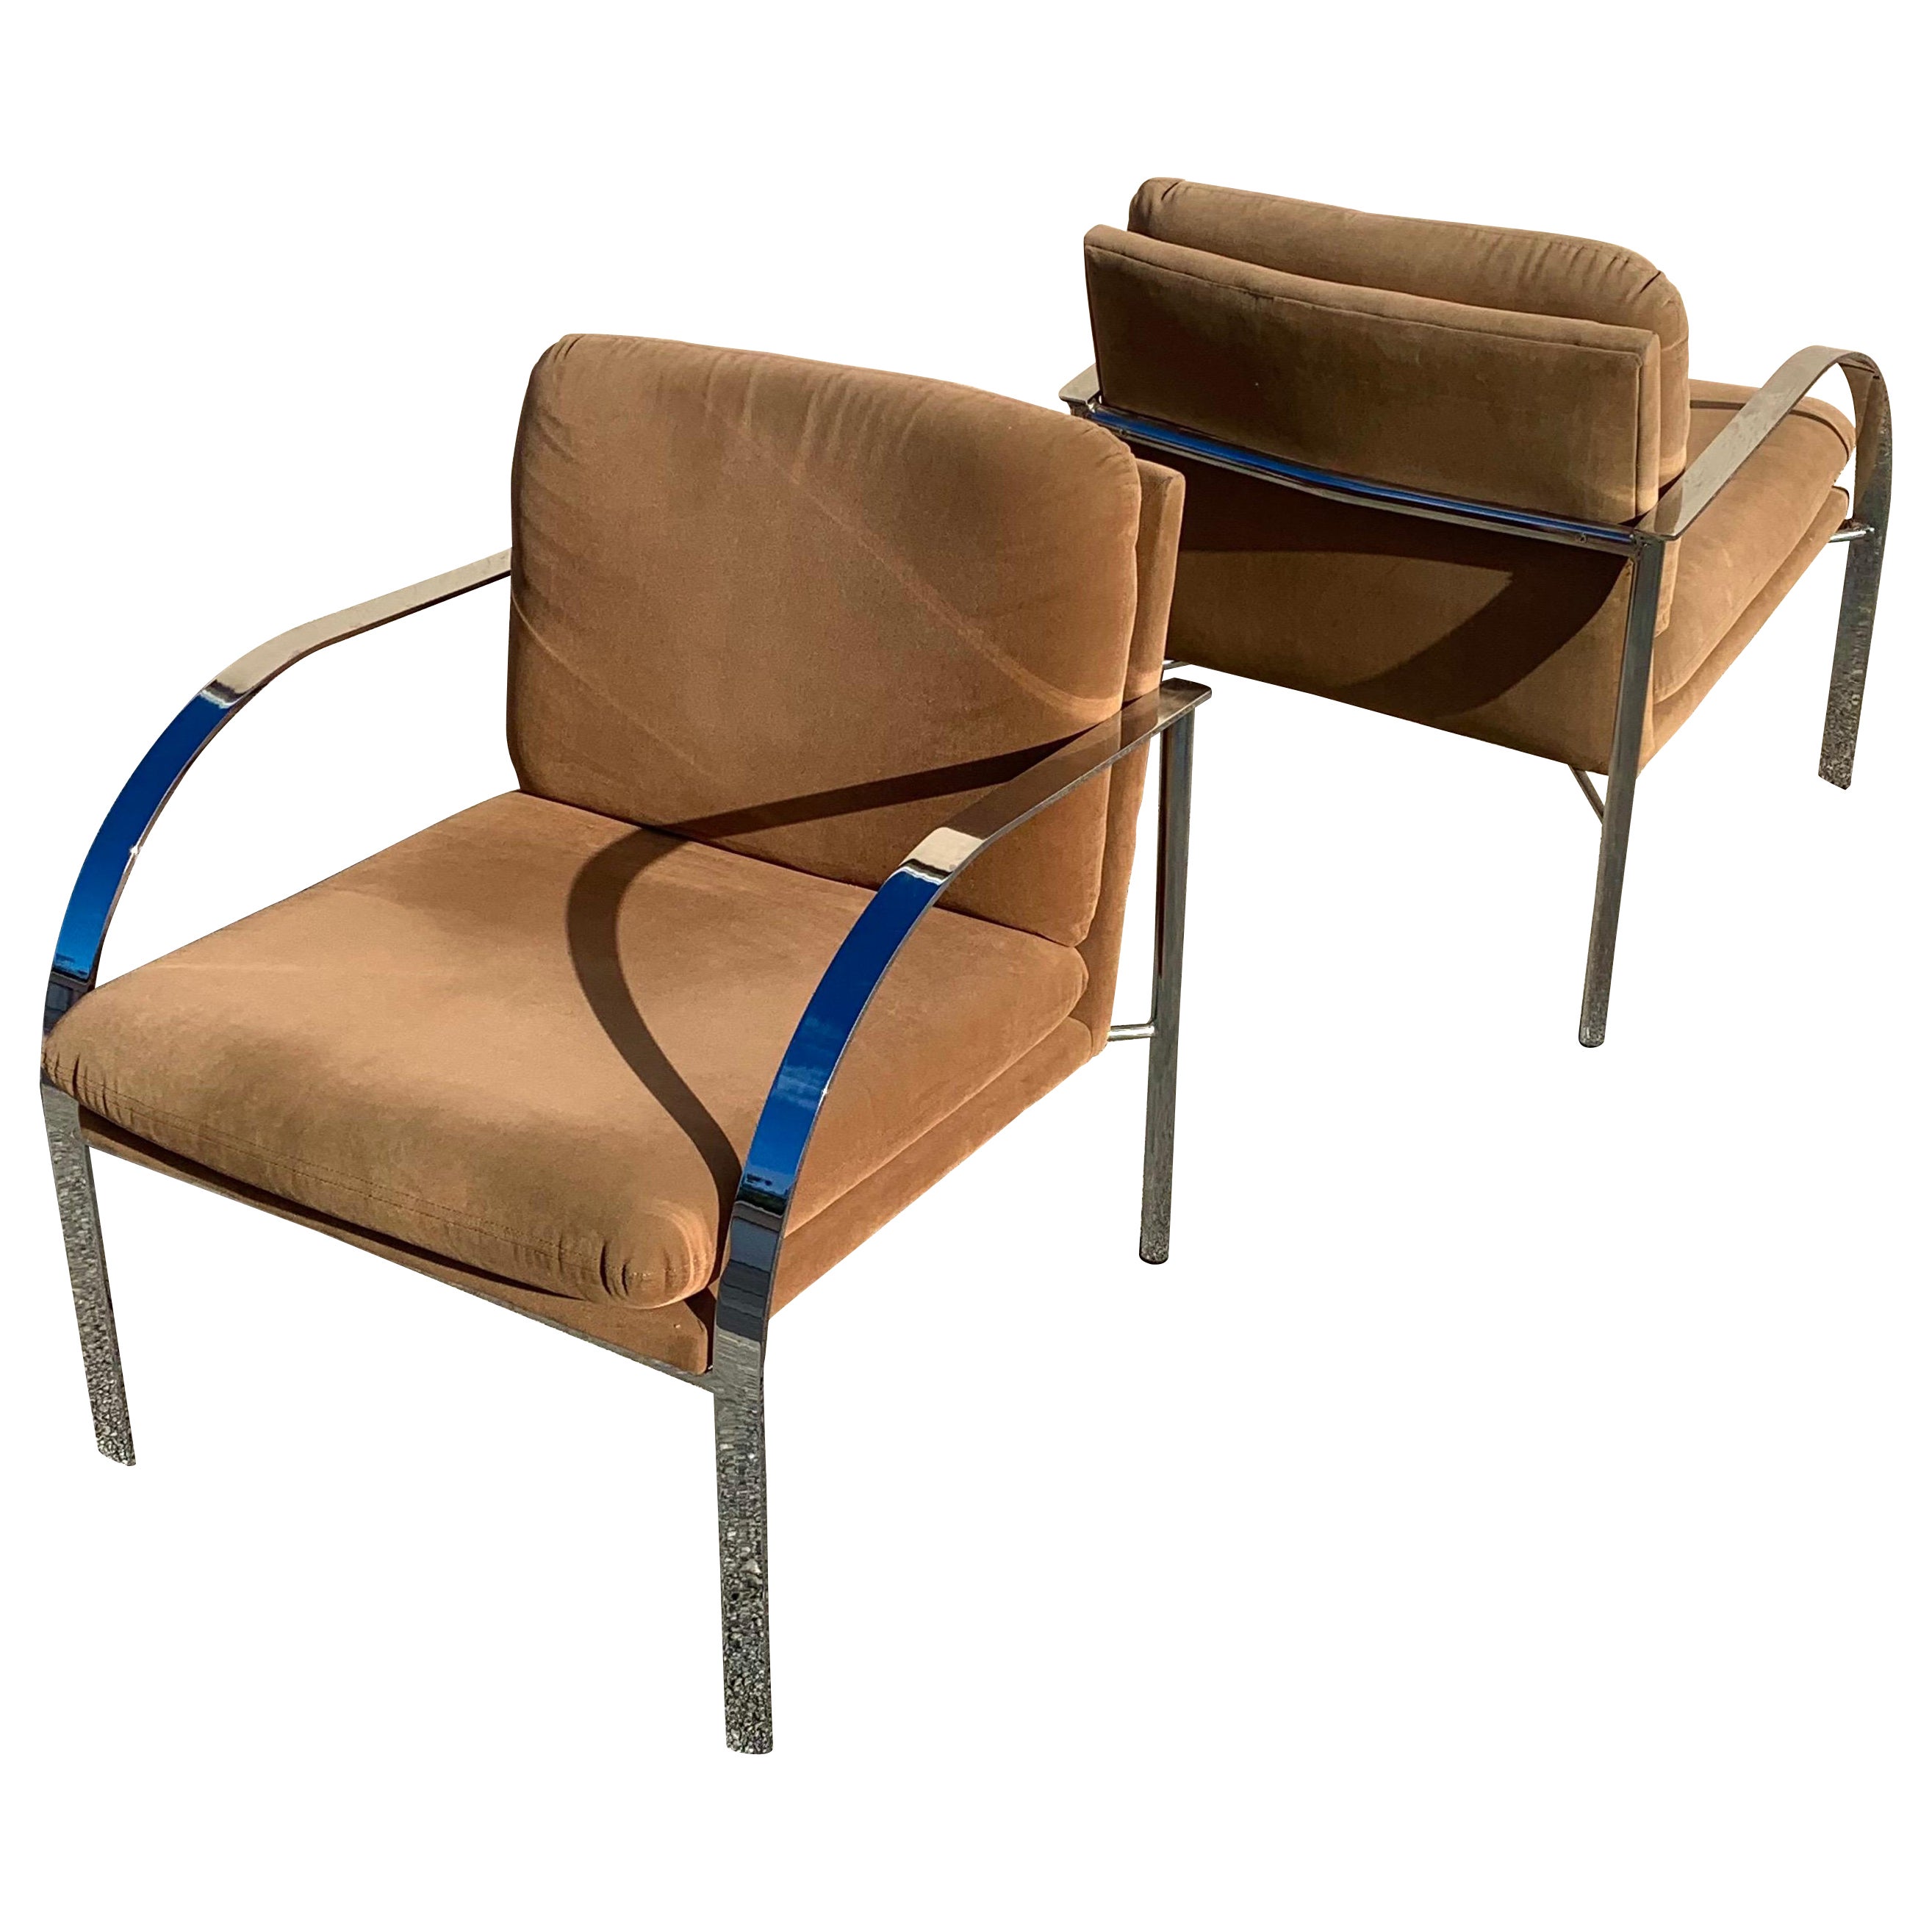 1980s Milo Baughman Style Mid-Century Modern Flat Bar Chrome Lounge Chairs